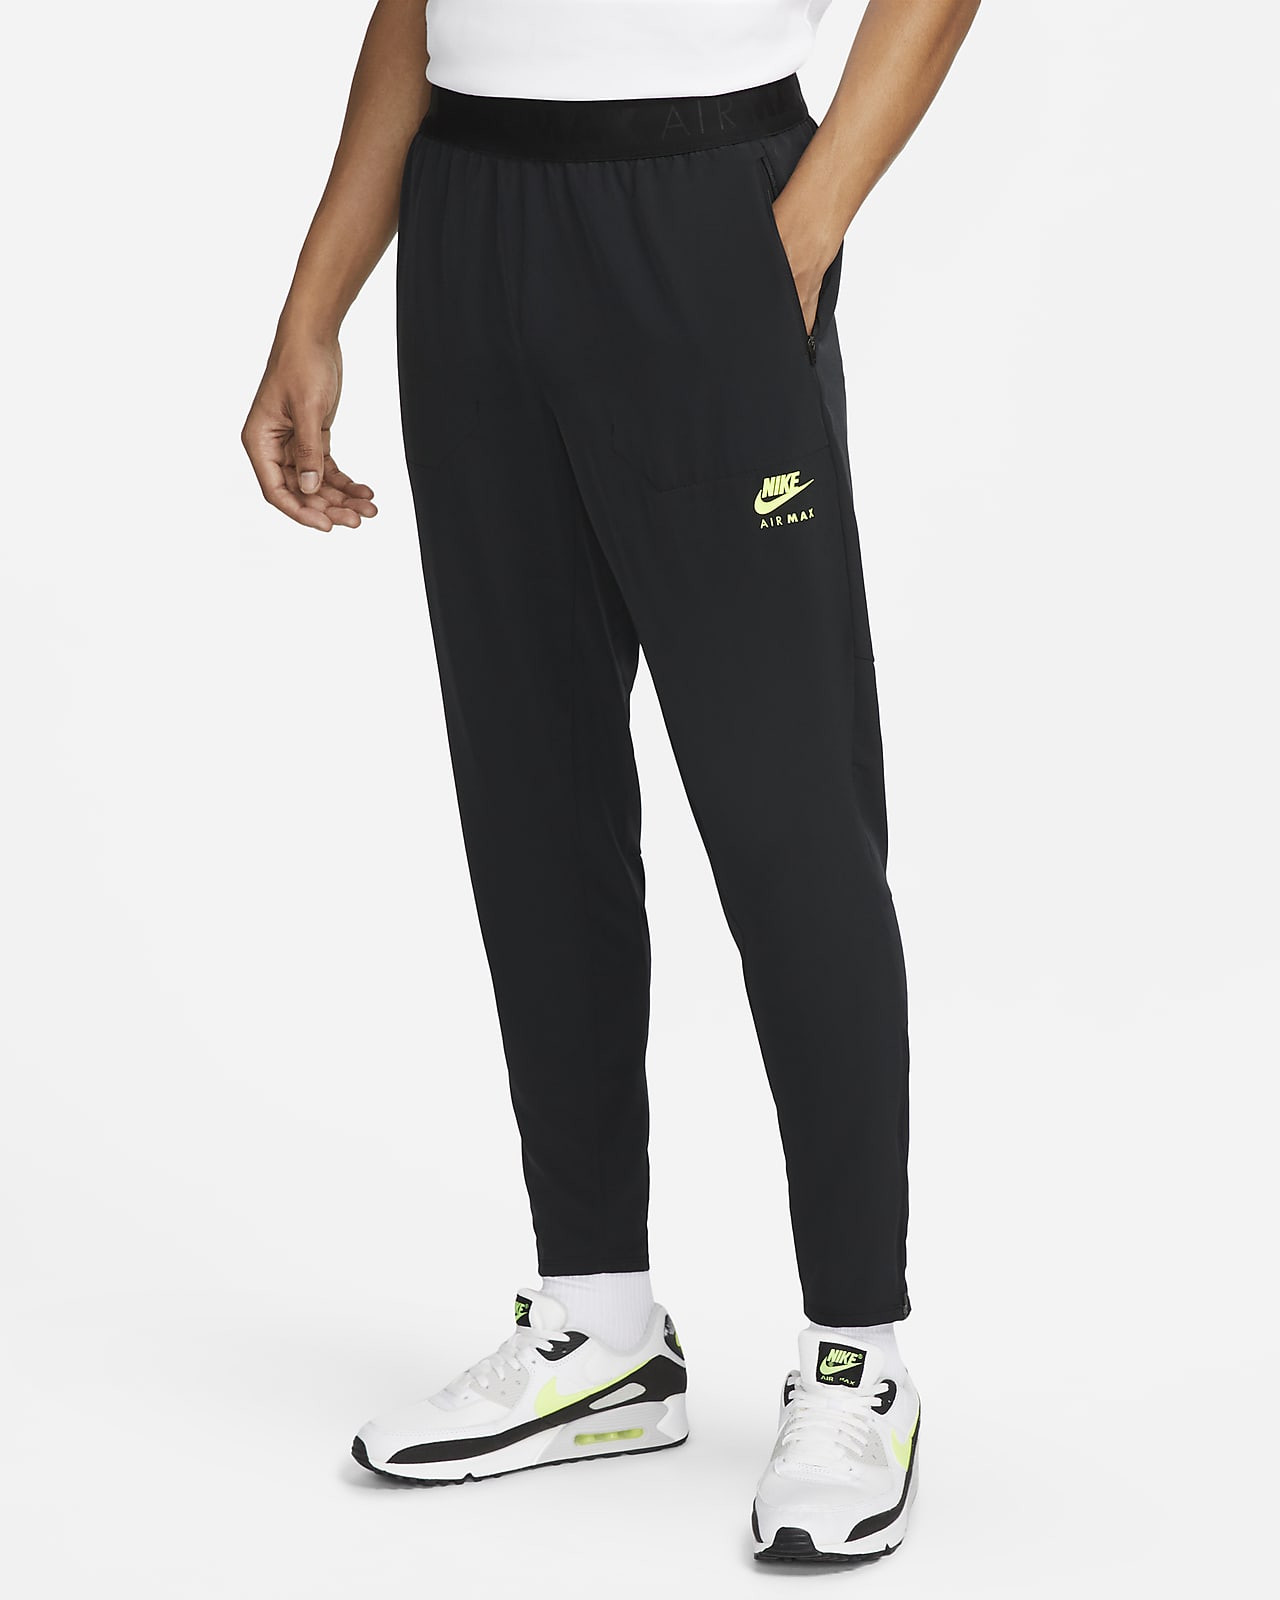 Nike Air Men's Woven Trousers.